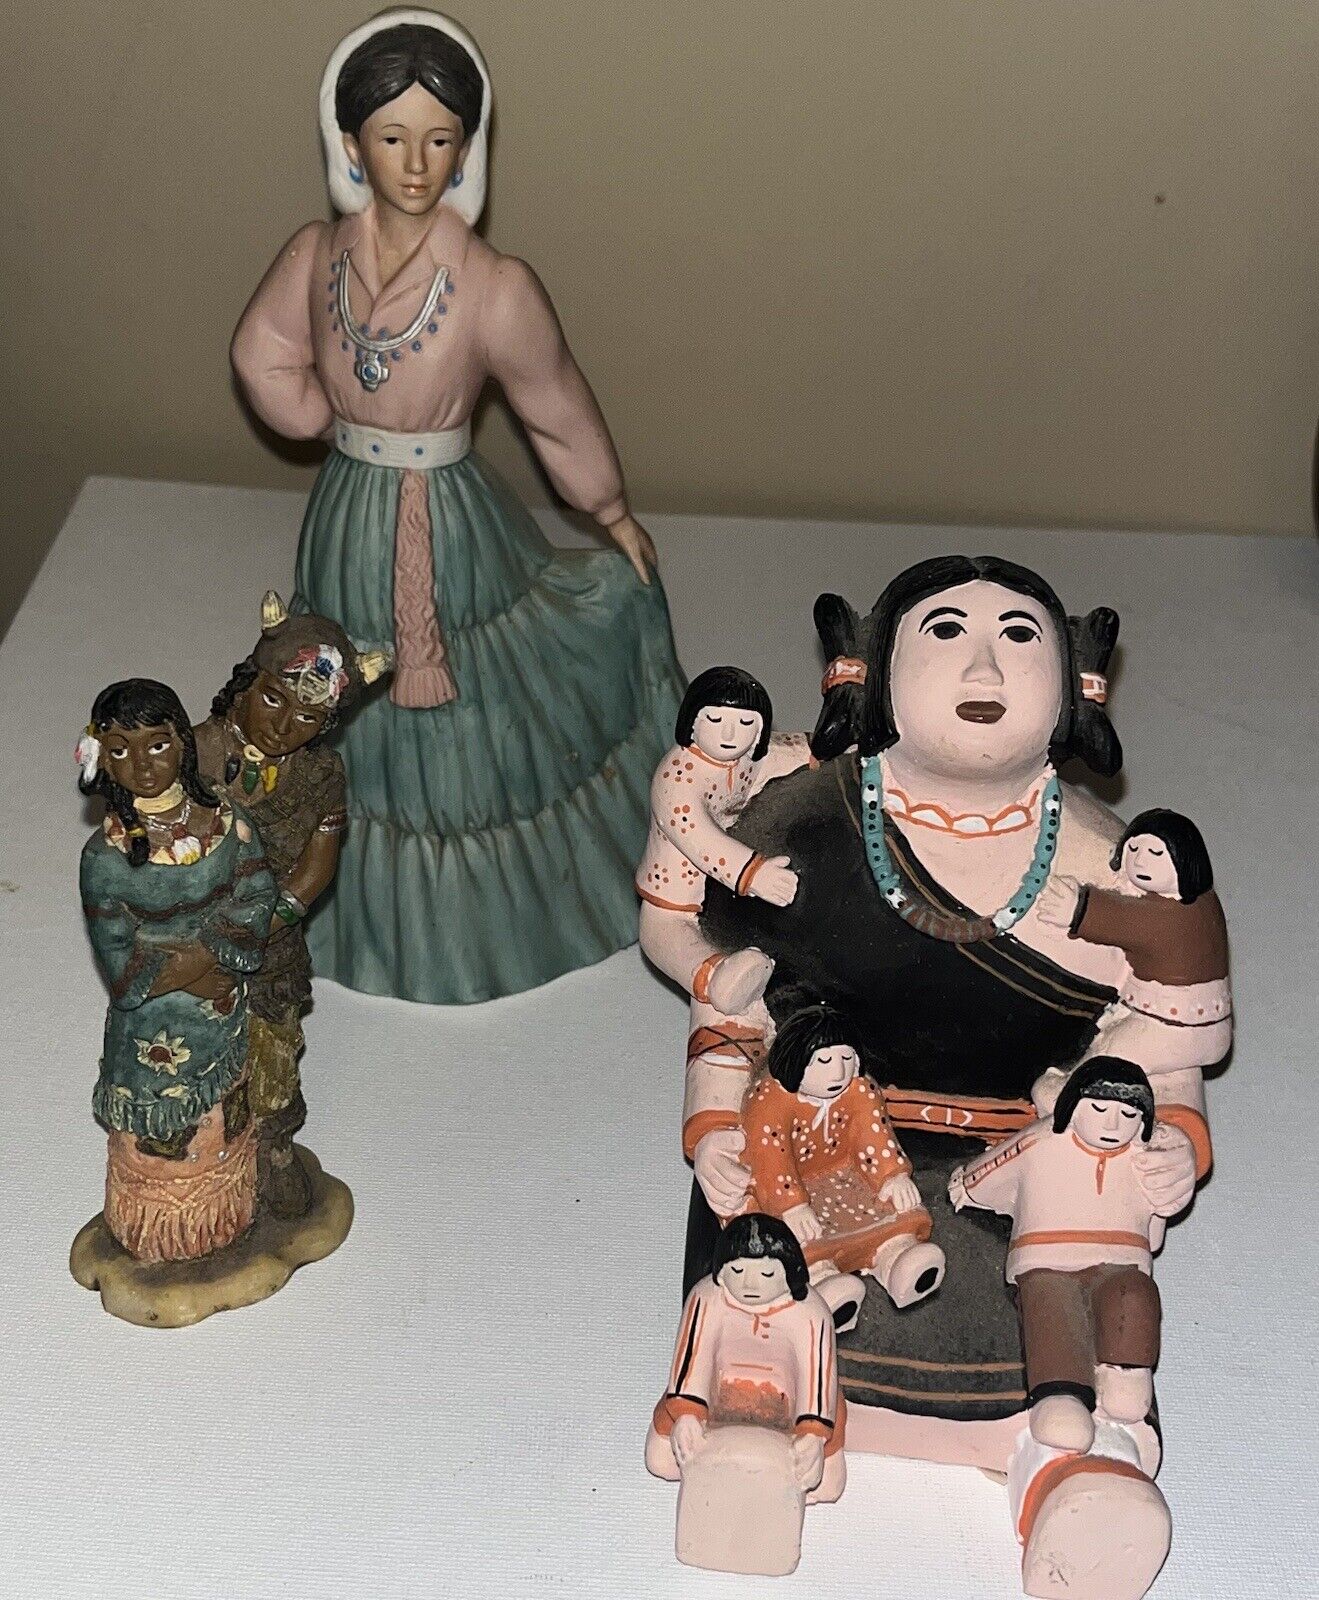 3 Vintage Native American Figurines Hopi Storyteller, Hisband Wife, Spanish Lady